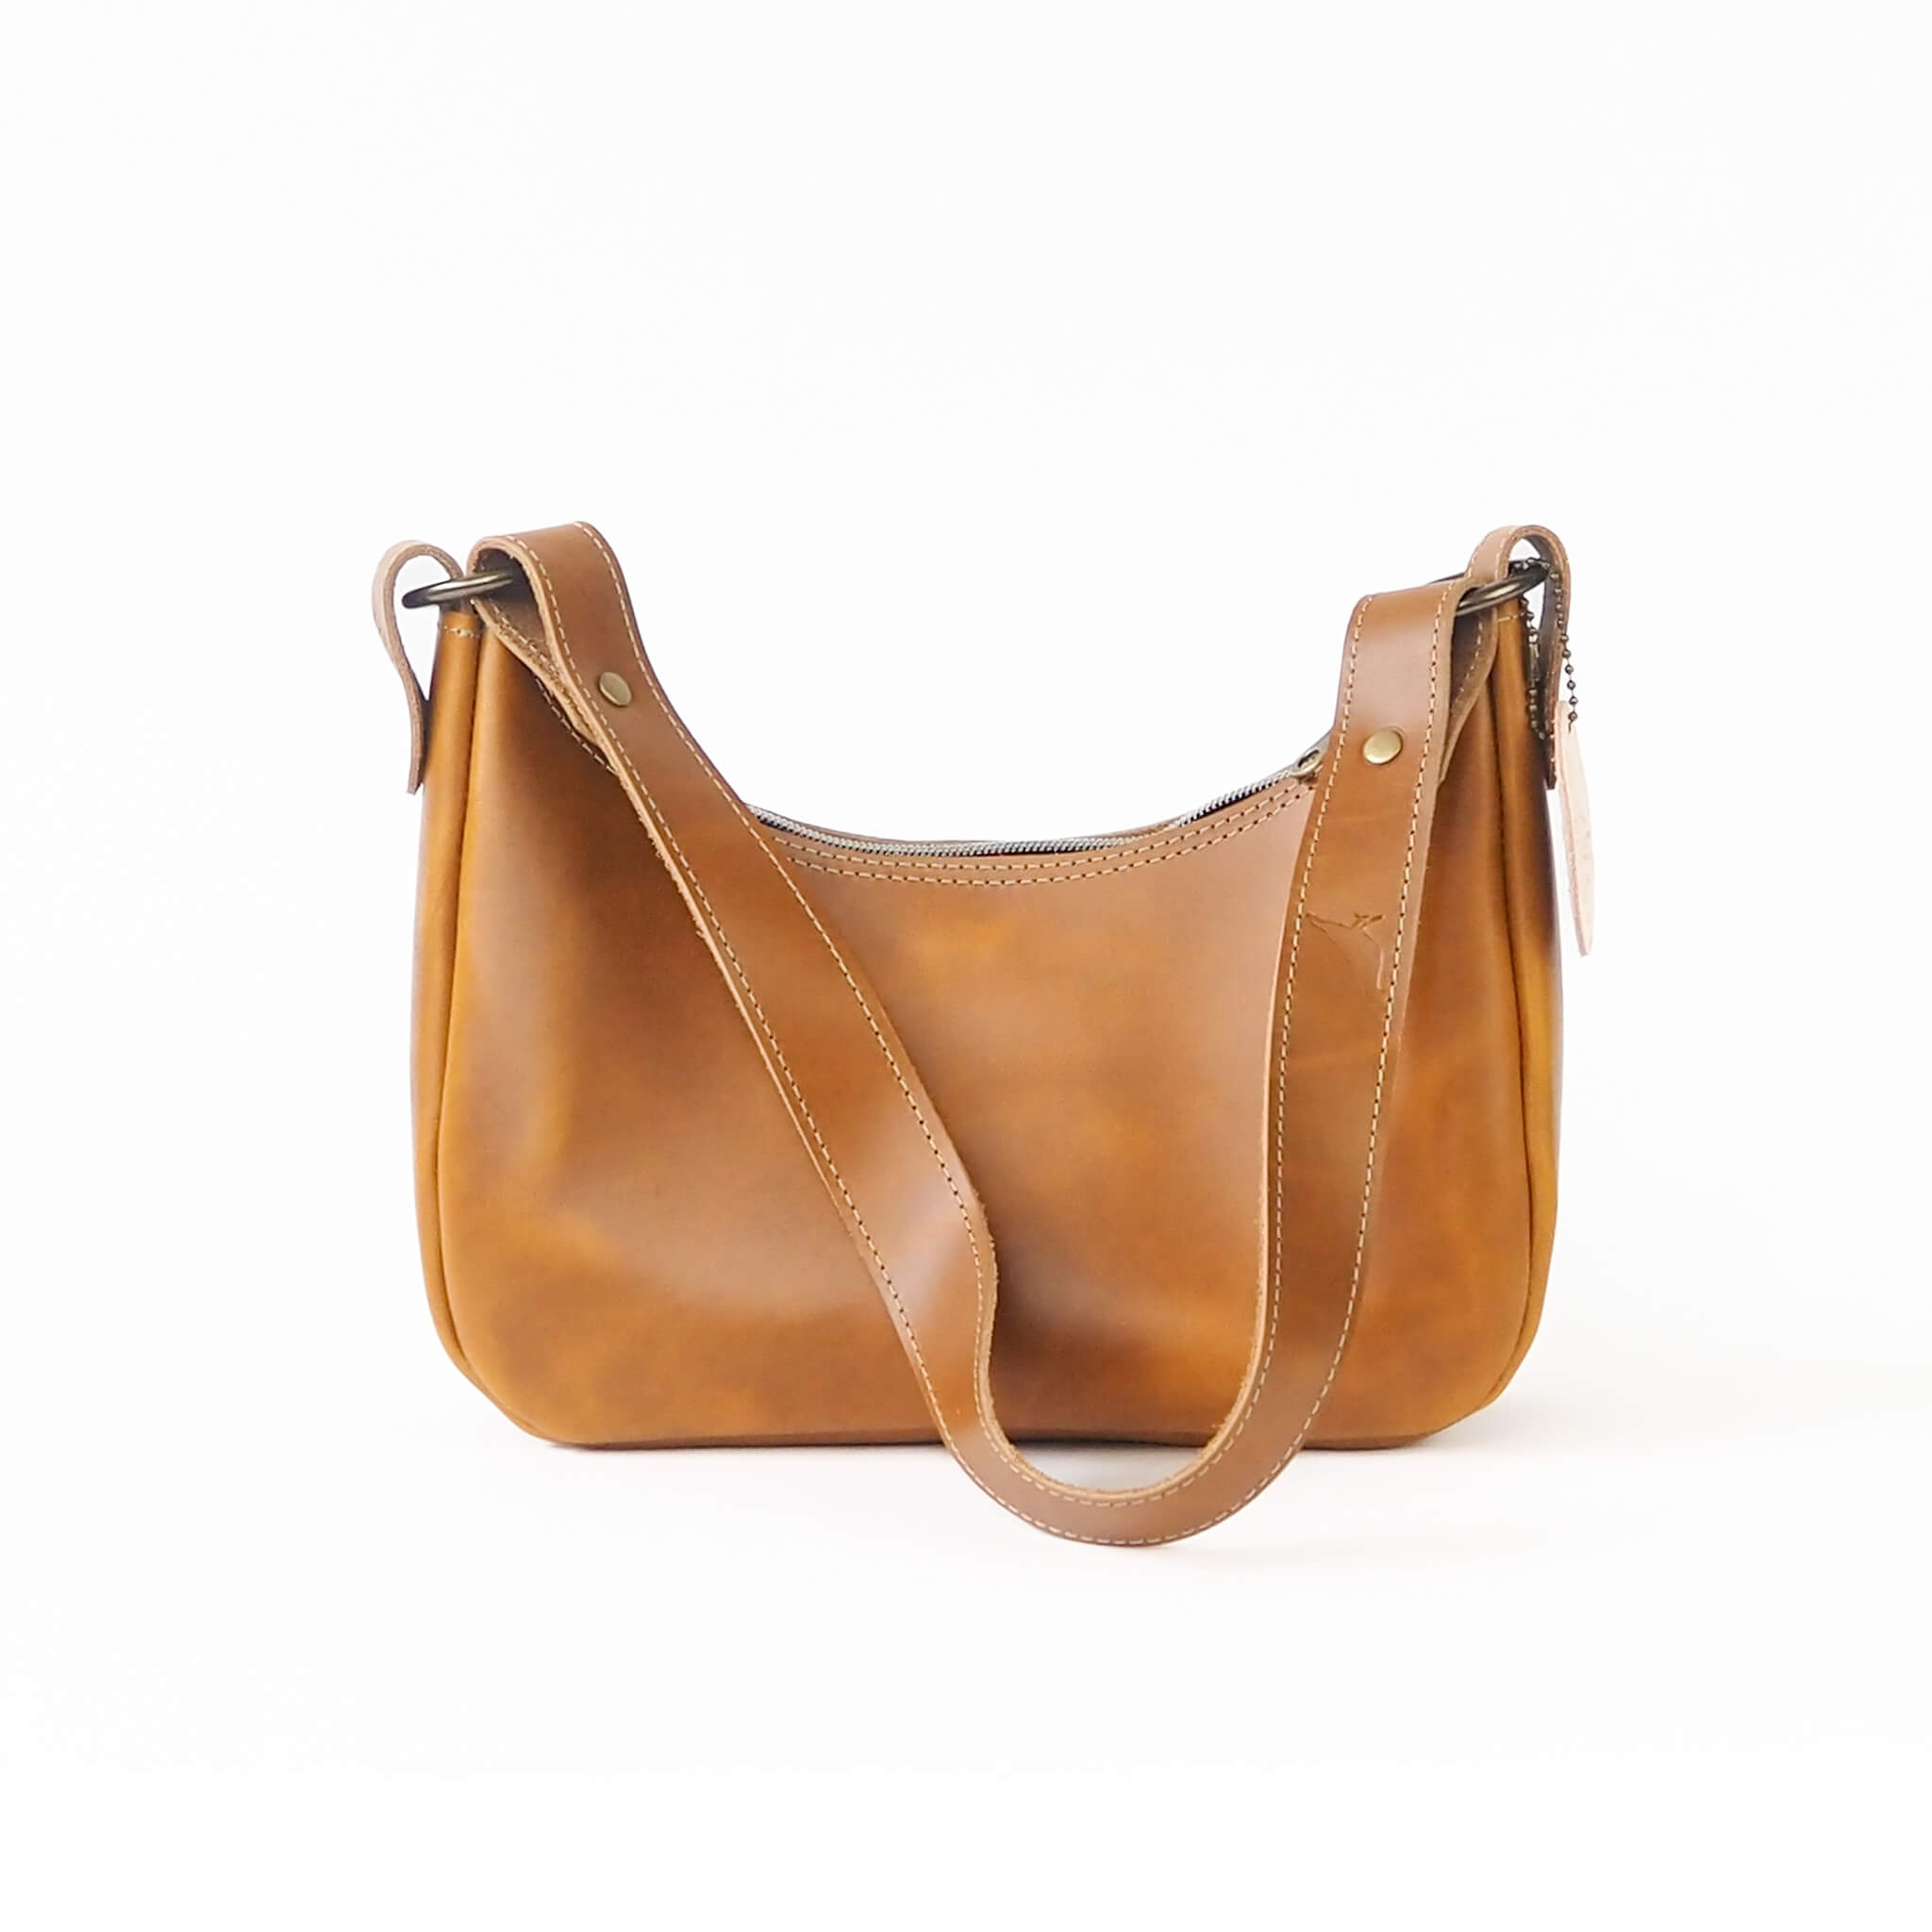 gigi handbag compact zipper handmade leather - sunflower front view